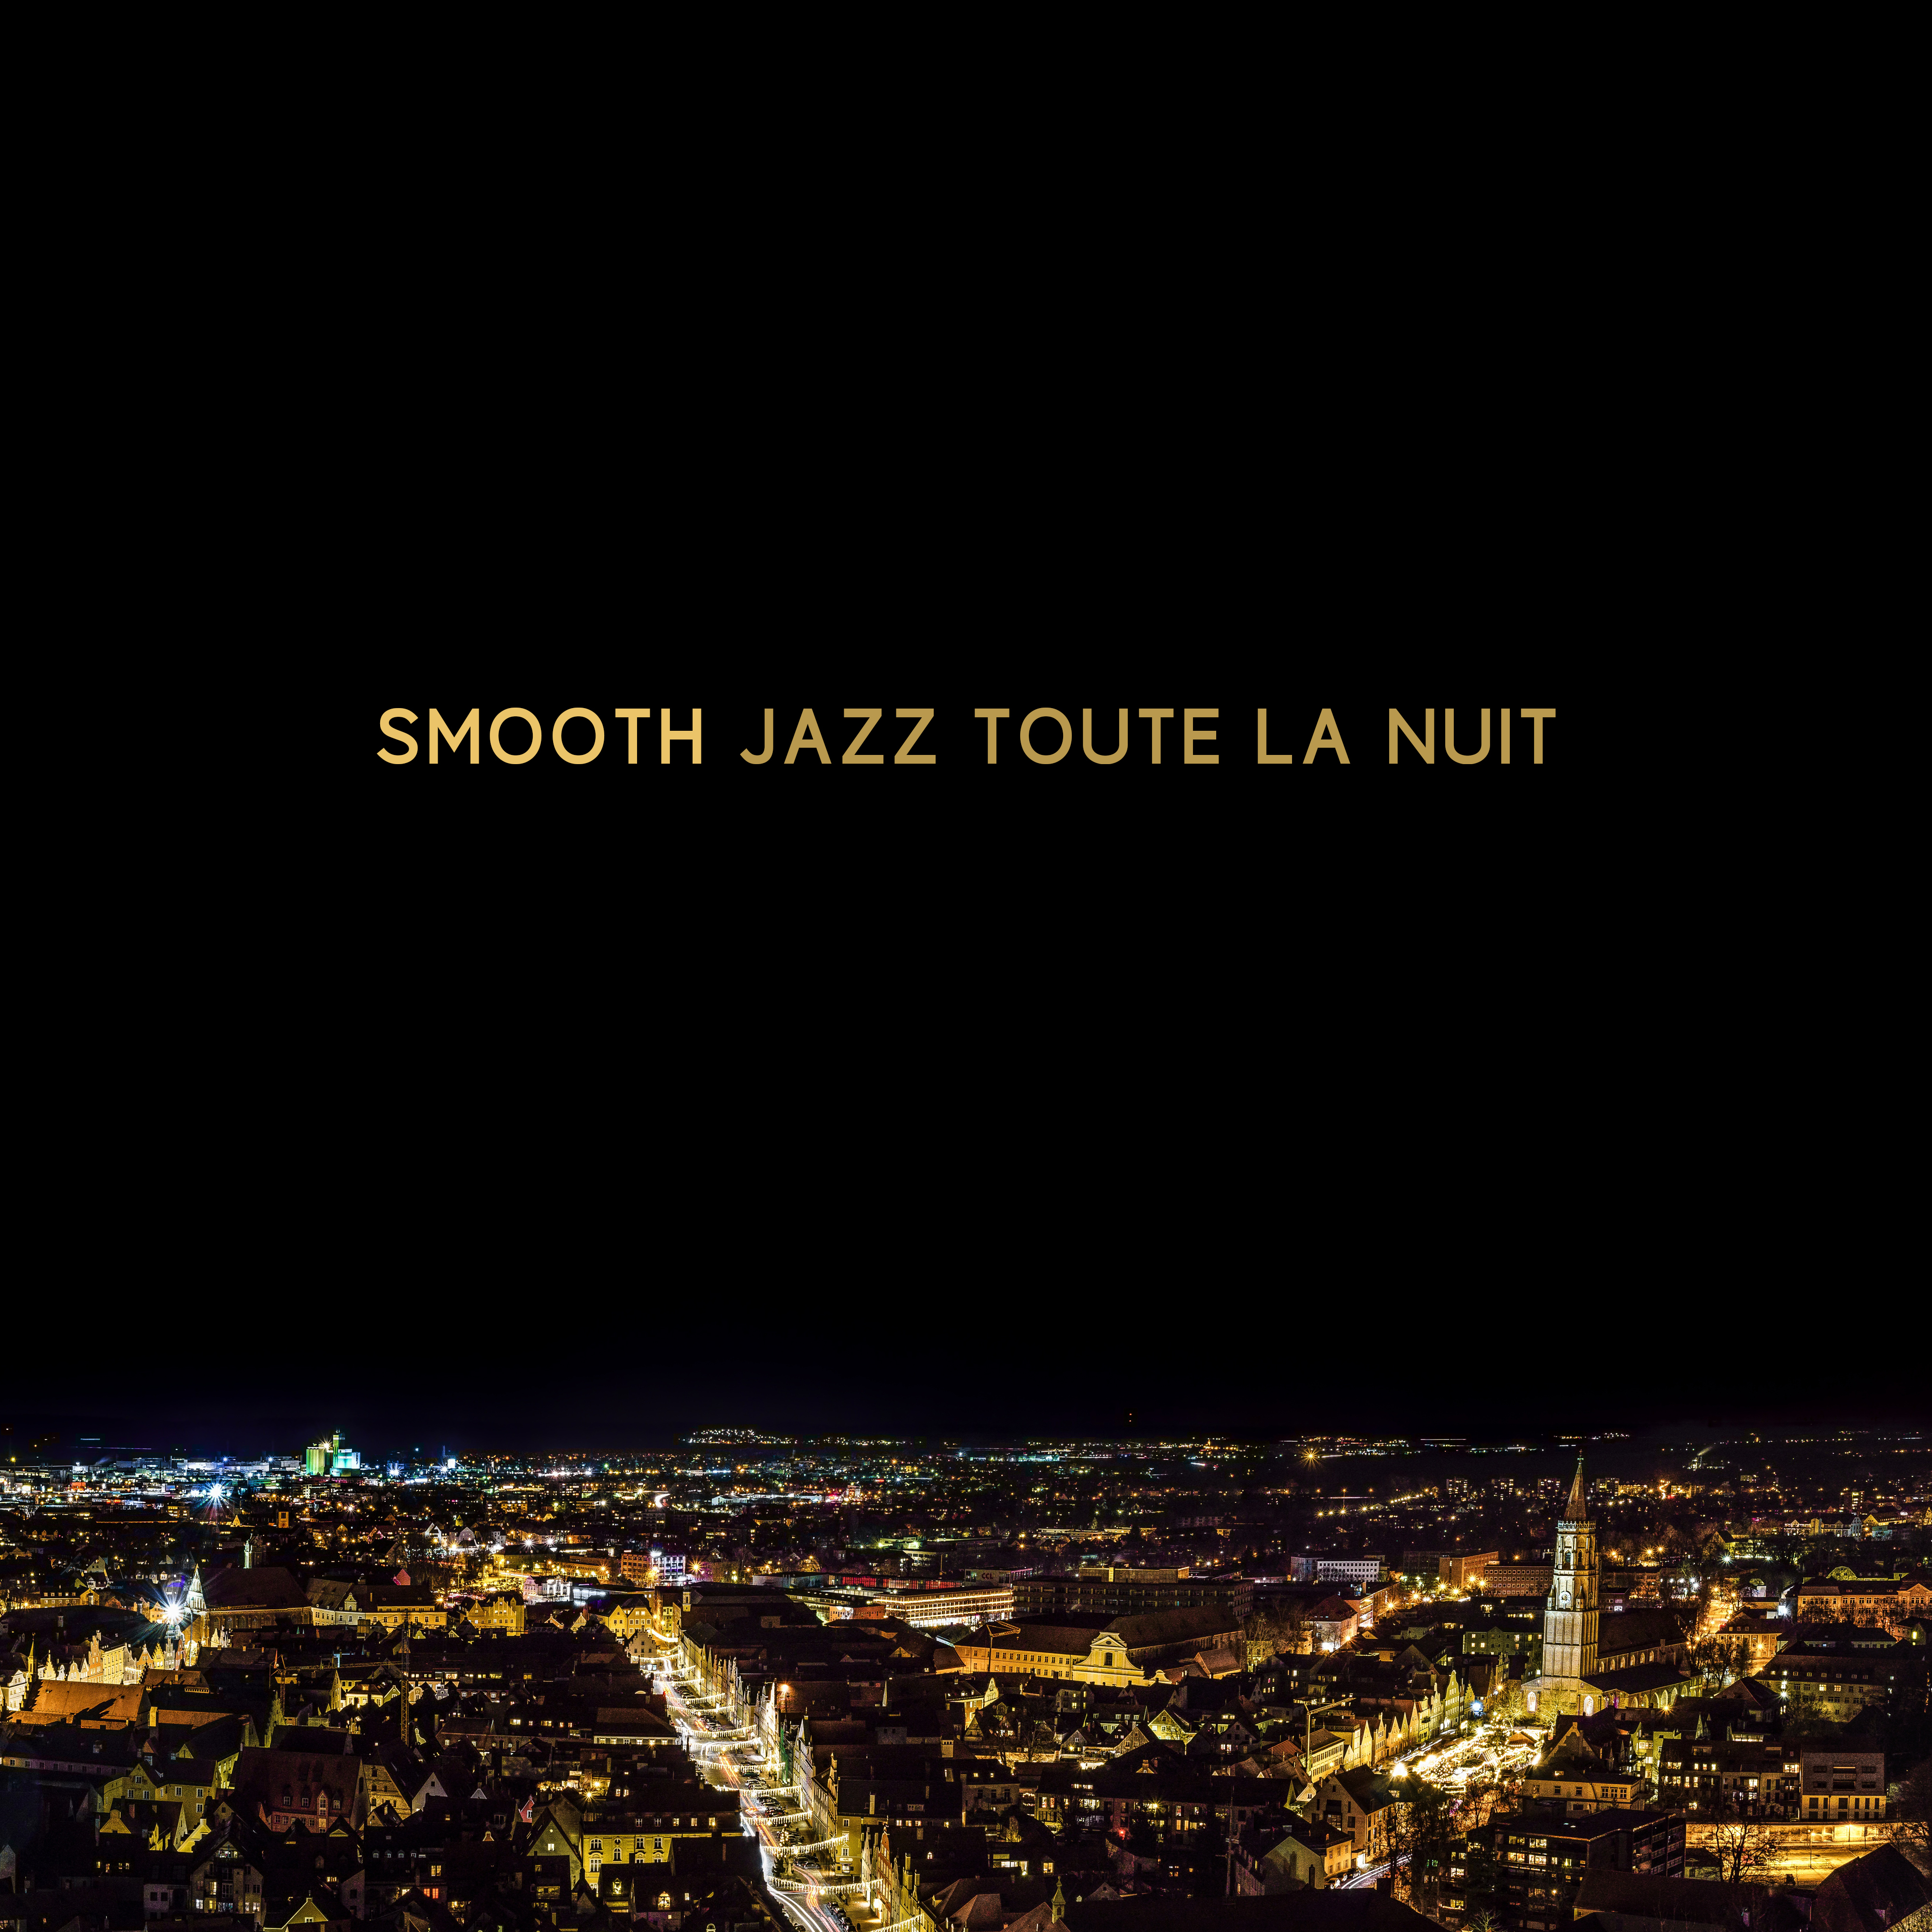 Smooth jazz toute la nuit